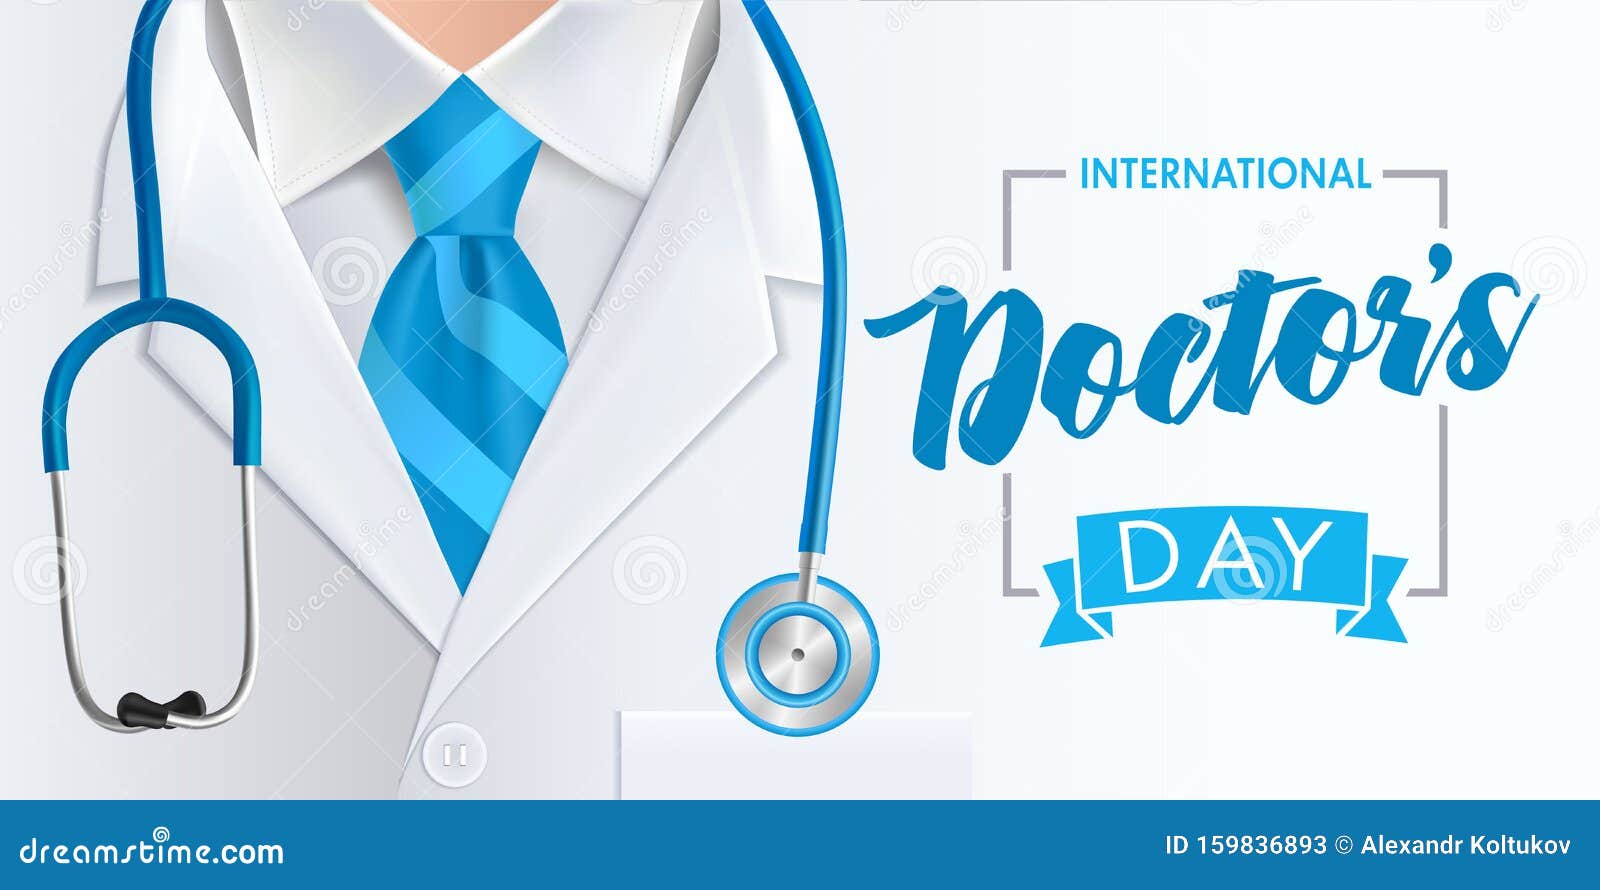 International Doctors Day Greeting Card Design Stock Vector